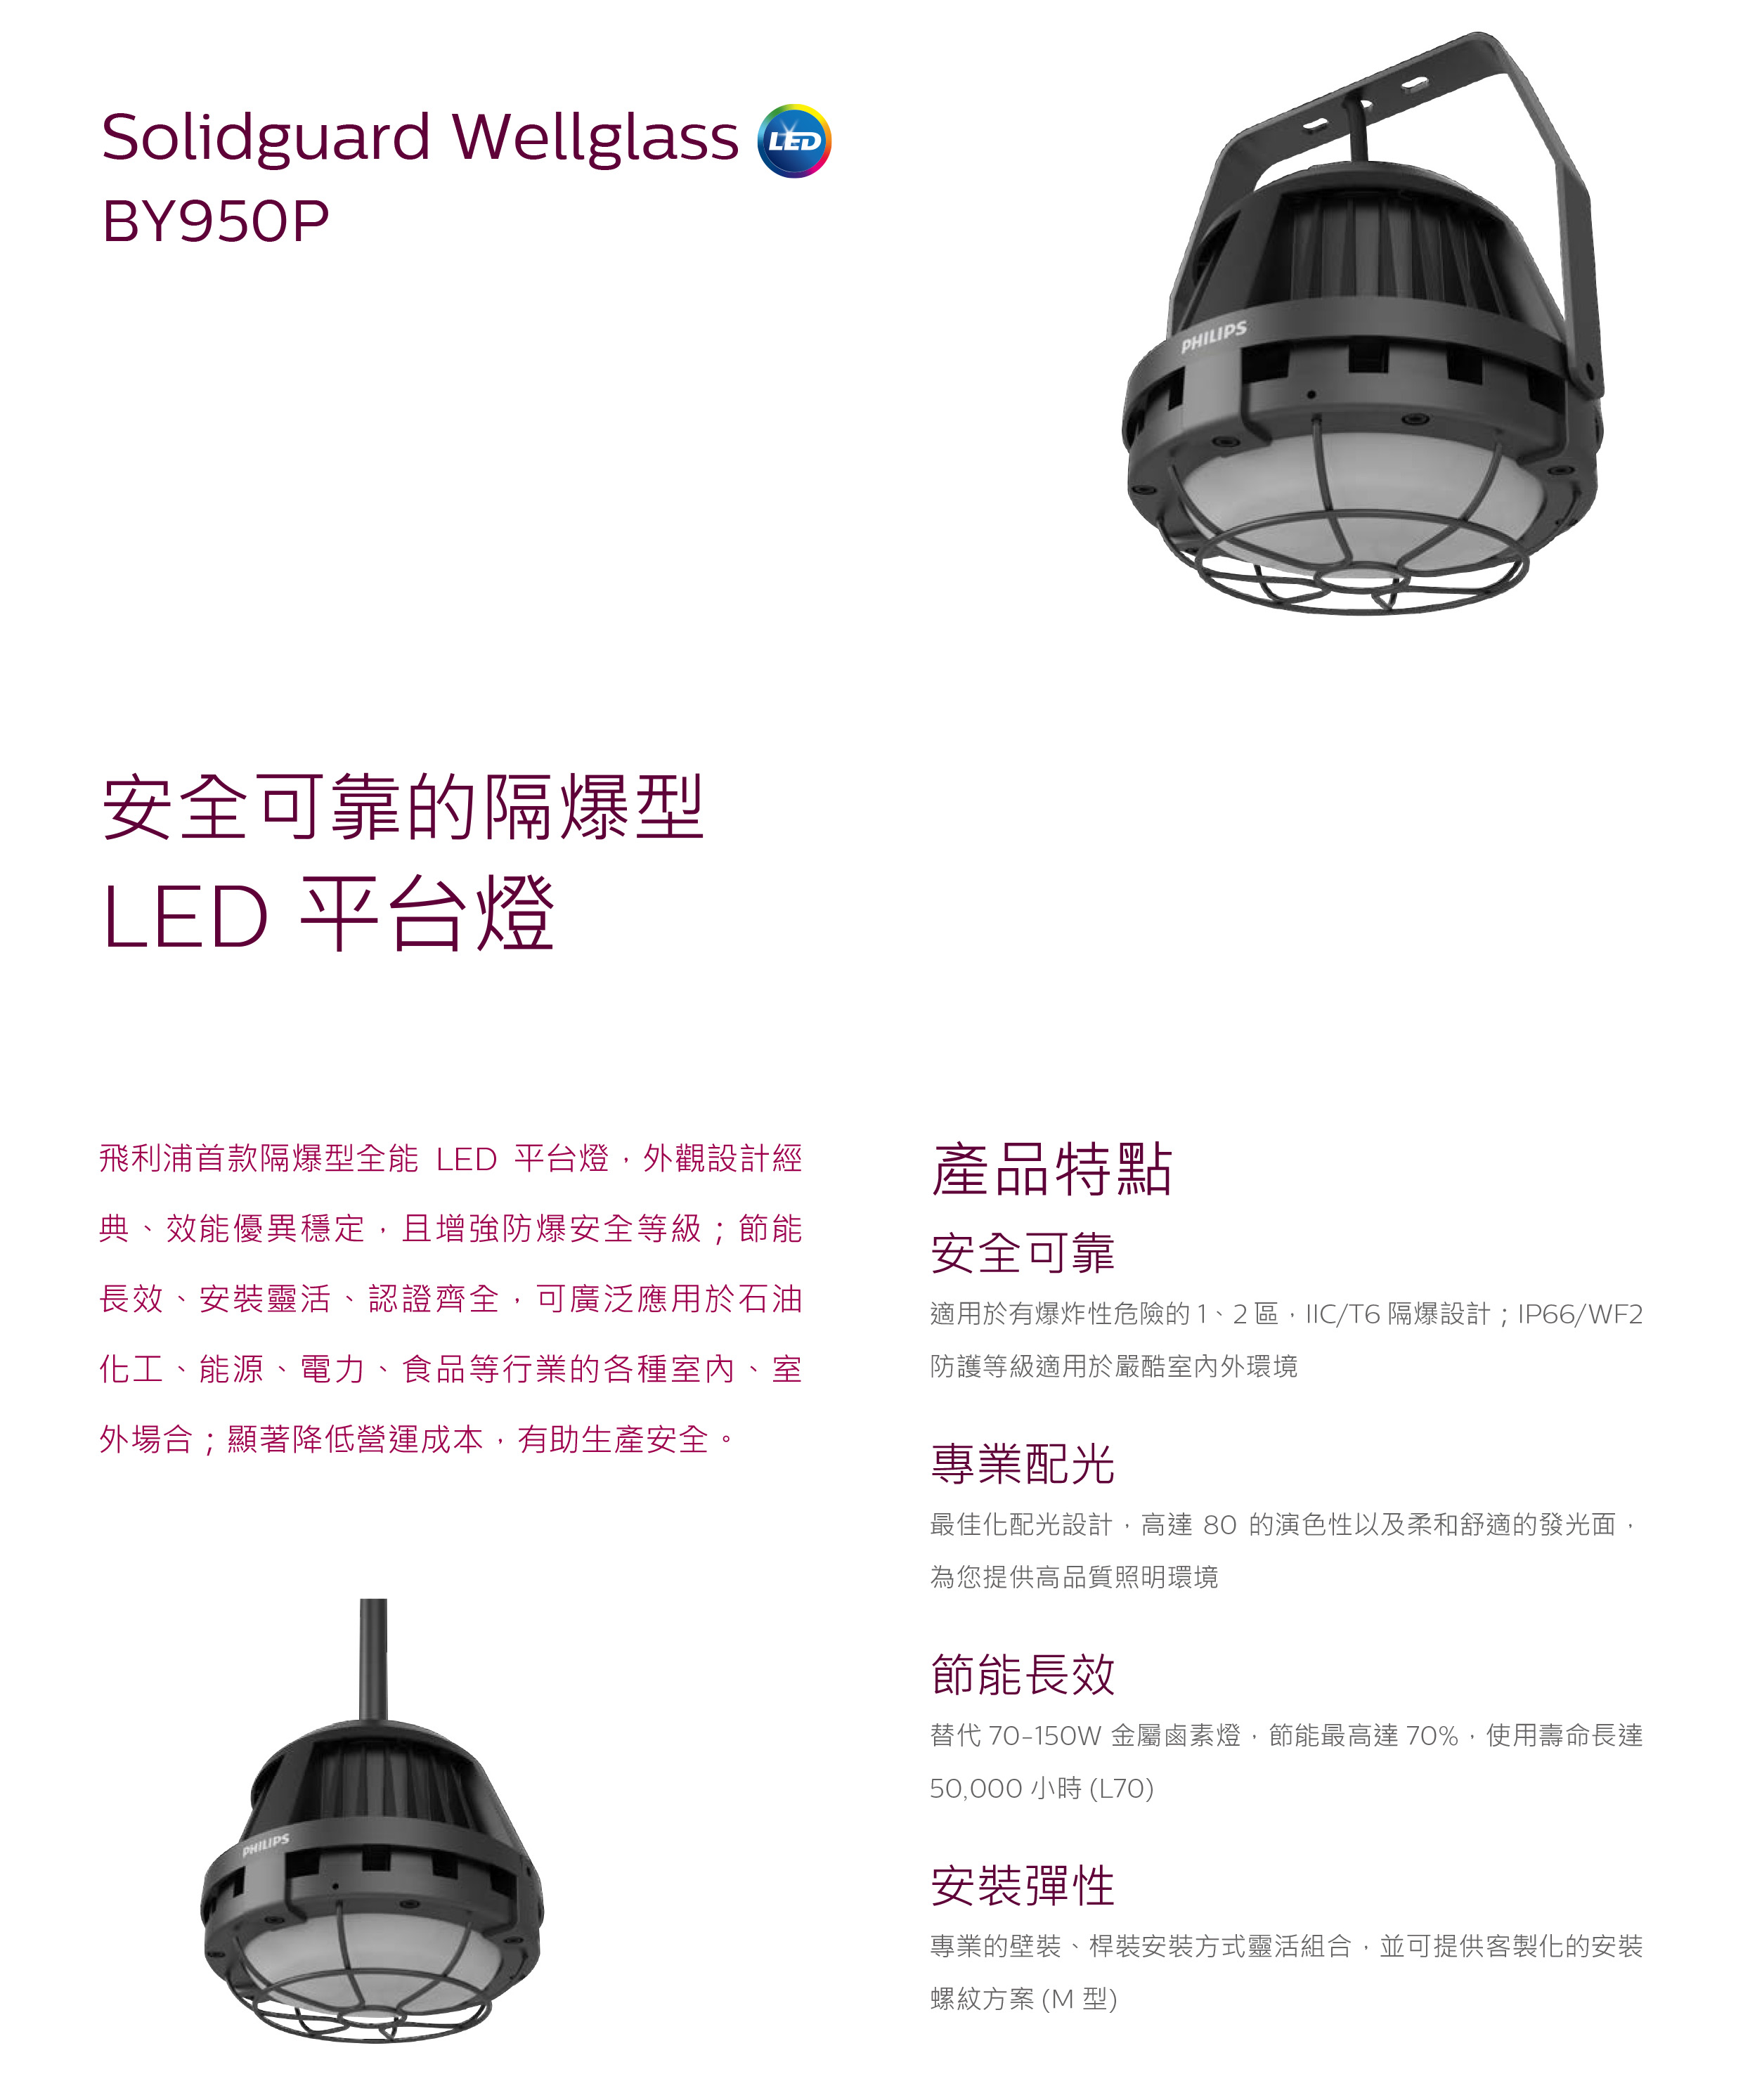 lighting philips BY950P 隔爆型平台燈